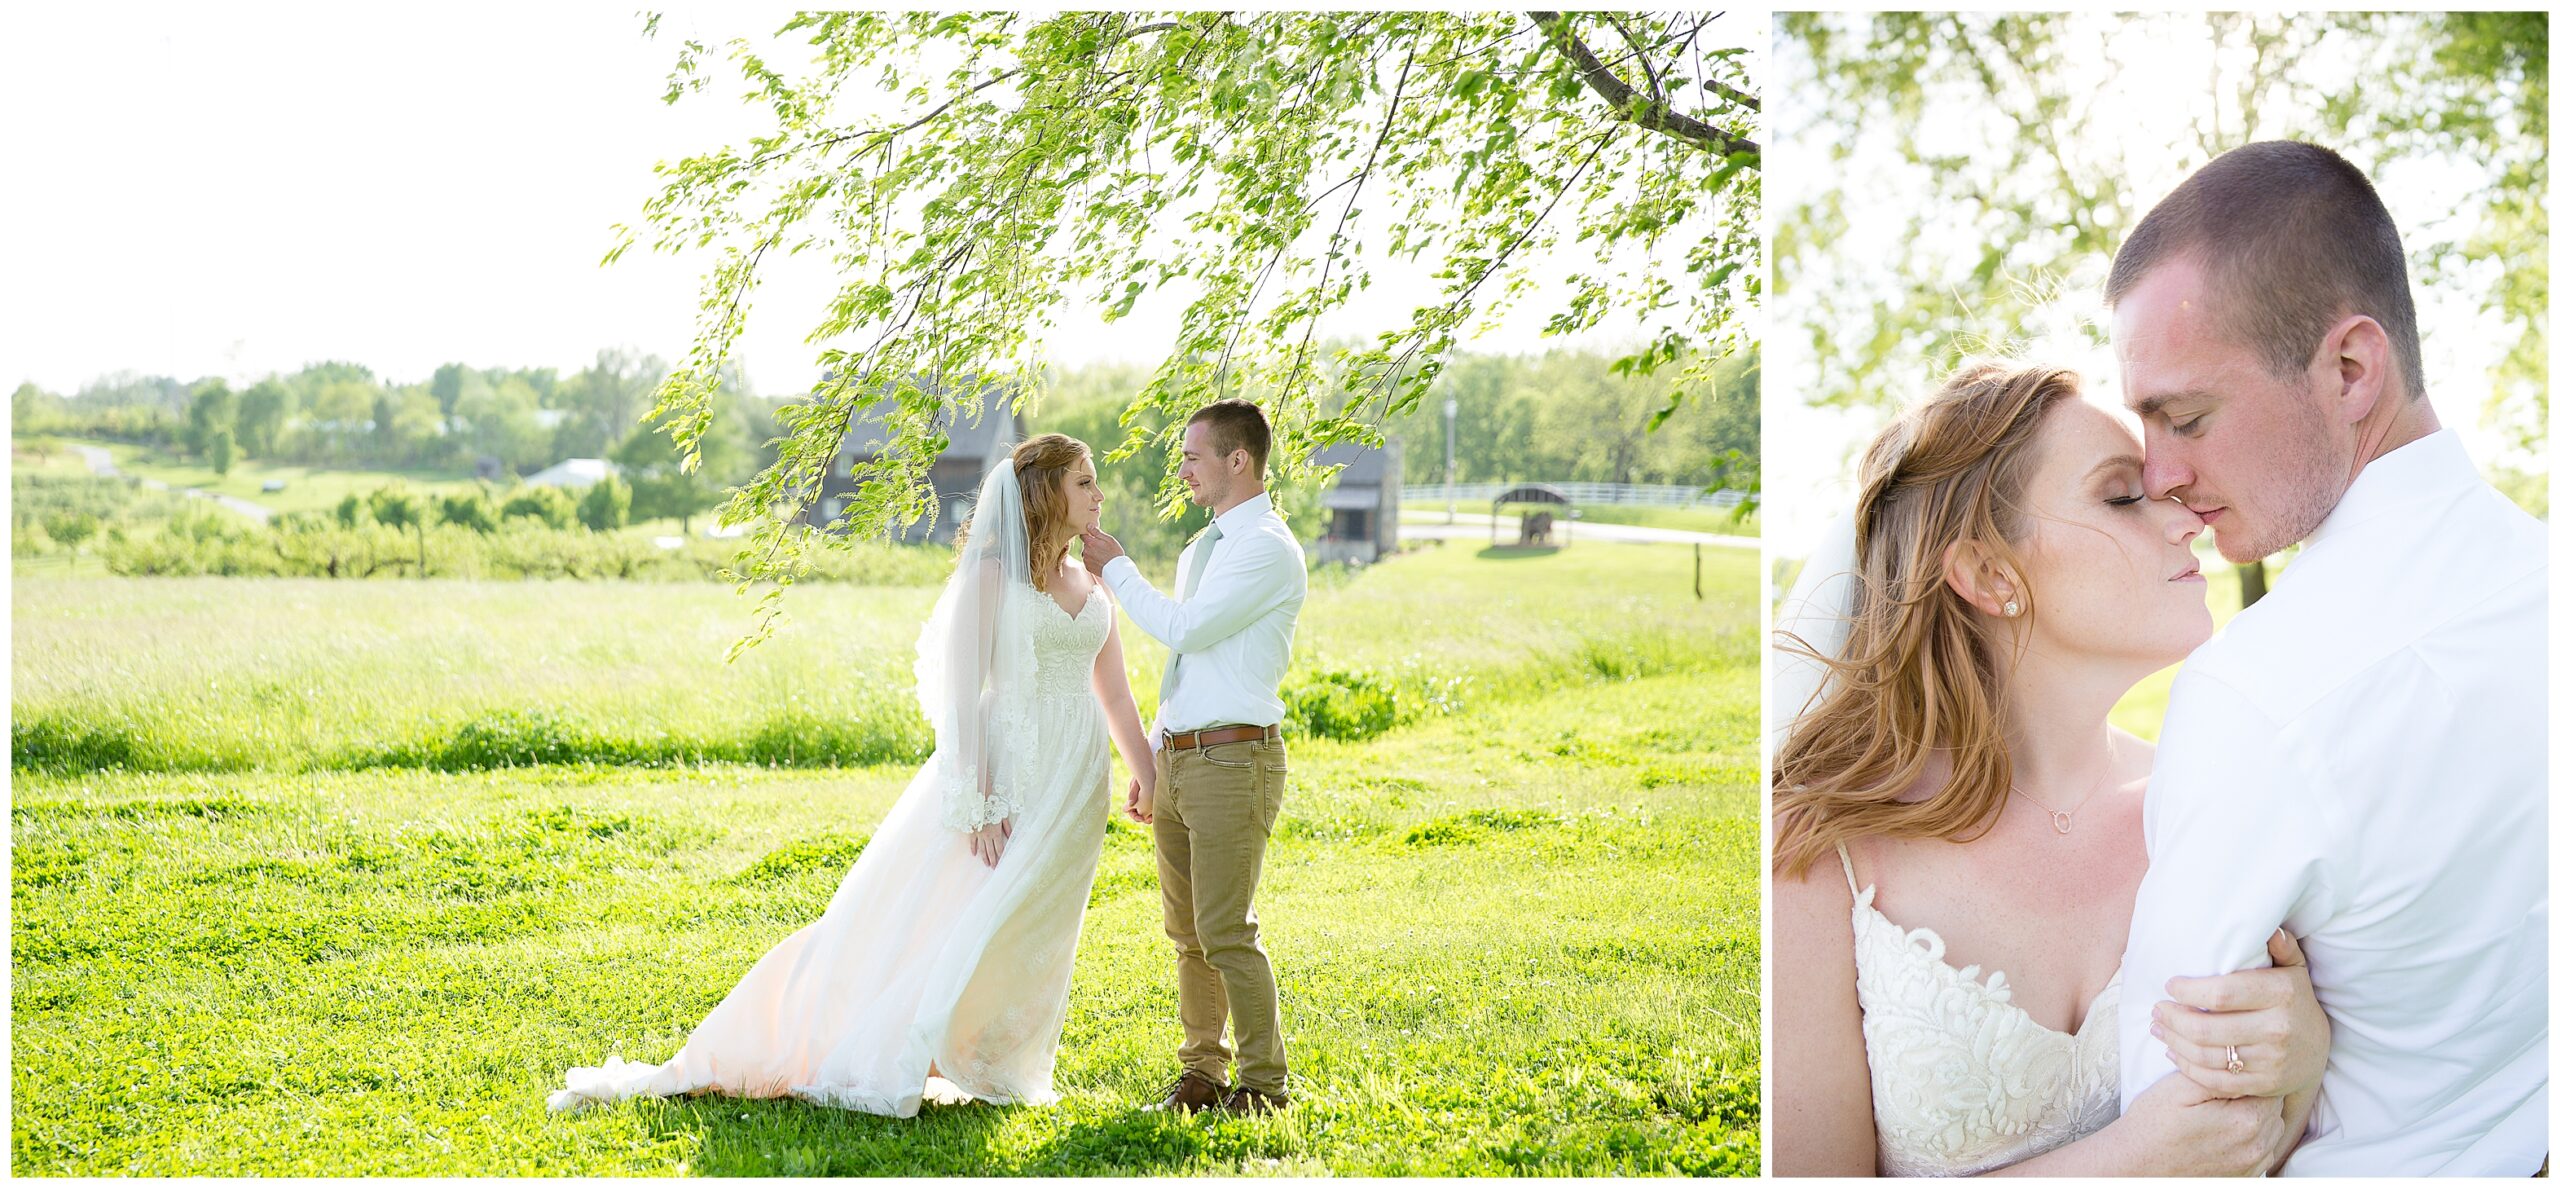 Cooper's Ridge wedding Boonville Missouri, romantic portraits wedding photography by Bella Faith Photography 